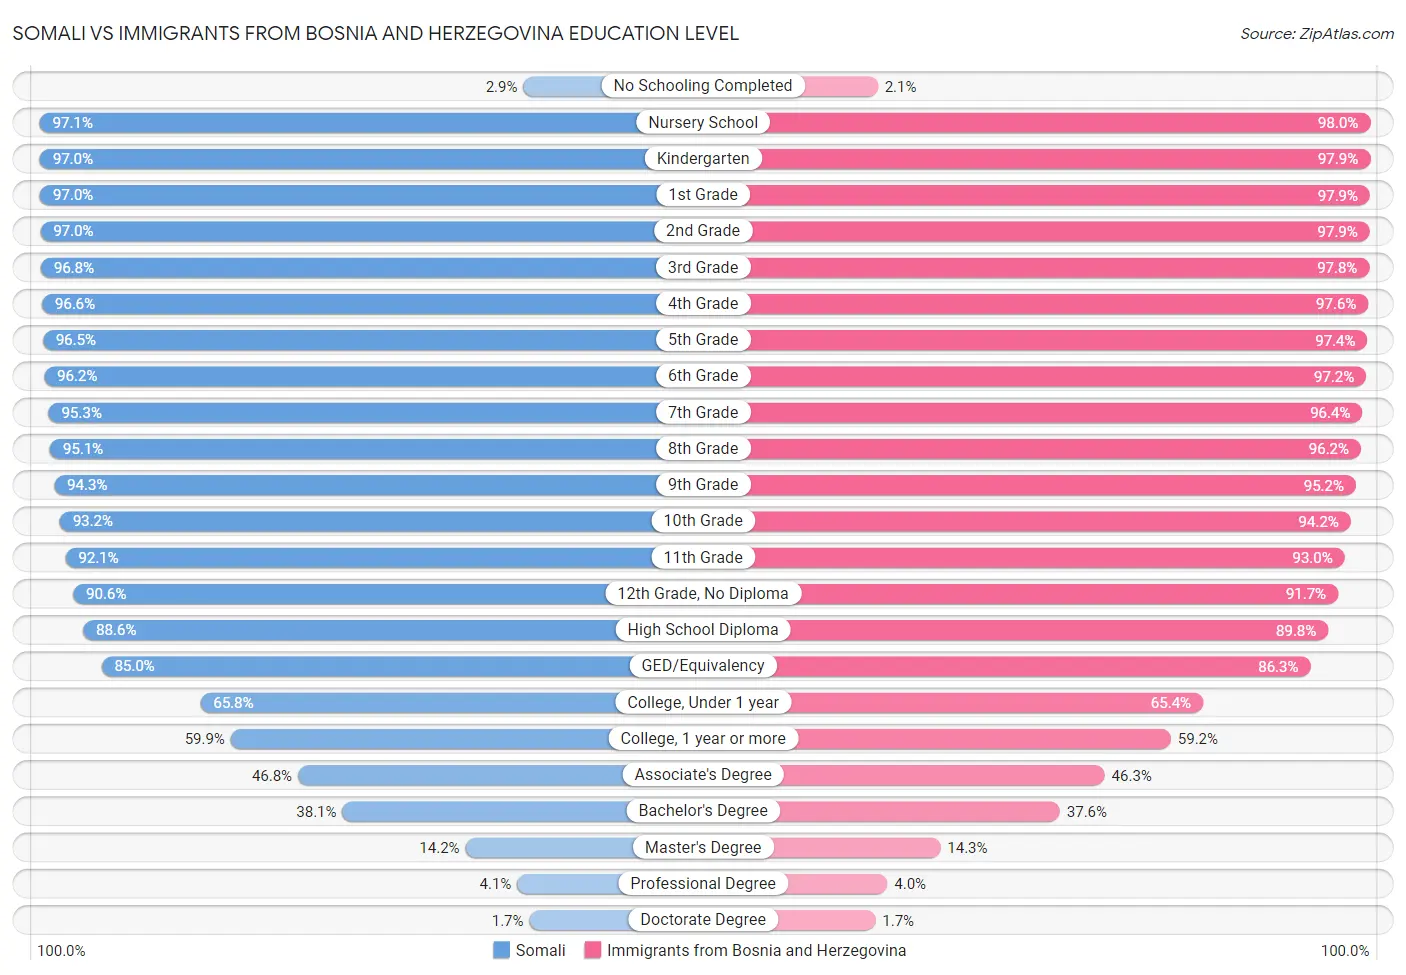 Somali vs Immigrants from Bosnia and Herzegovina Education Level